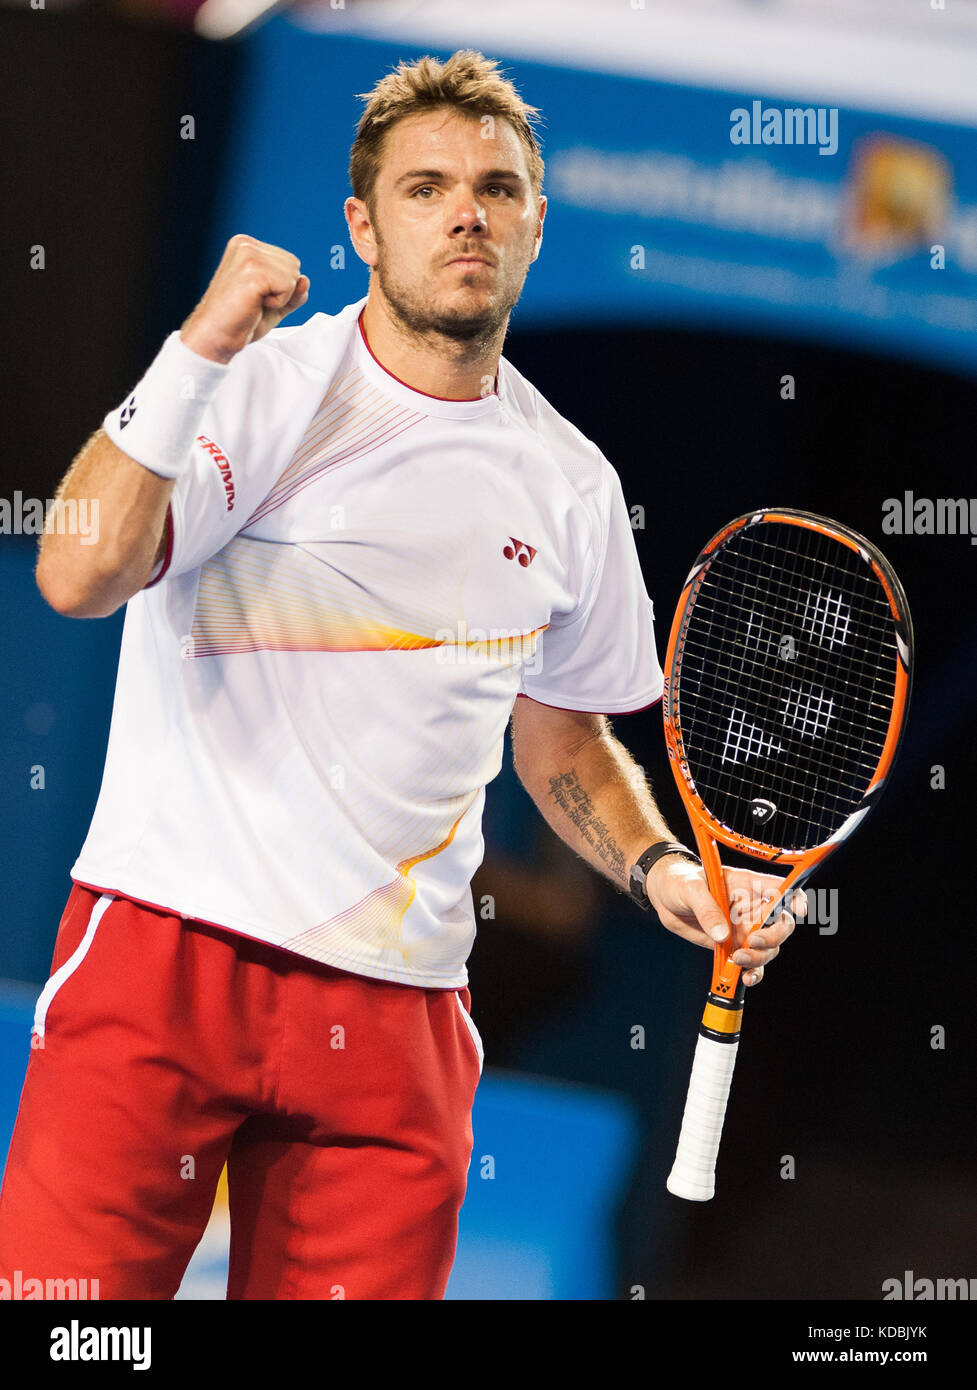 Stan Wawrinka in azione contro N Djokovic all'Australian Open Foto Stock